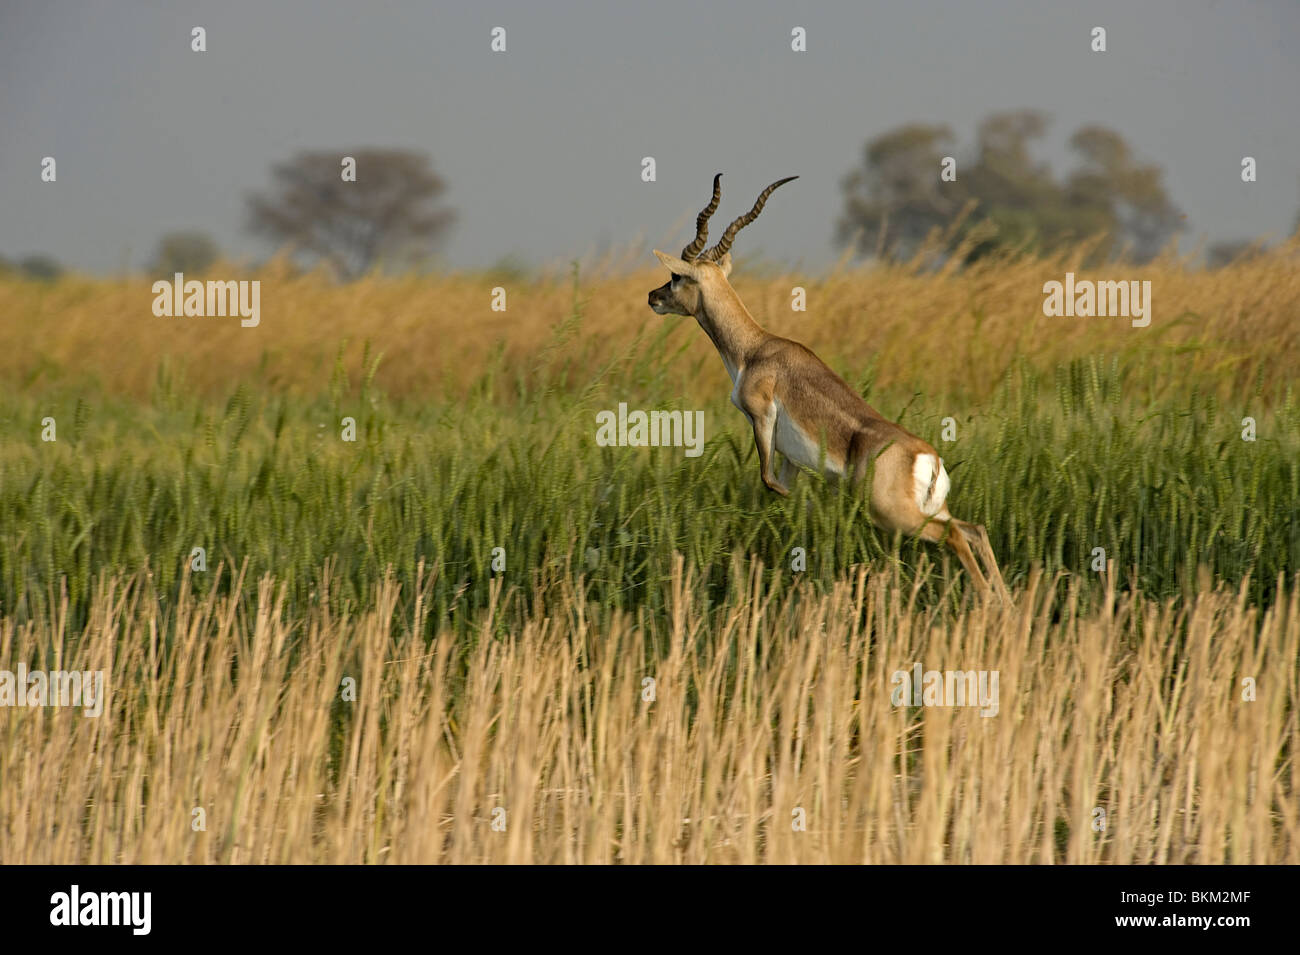 Blackbuck, Antilope cervicapra, jumping out of cornfield India Stock Photo